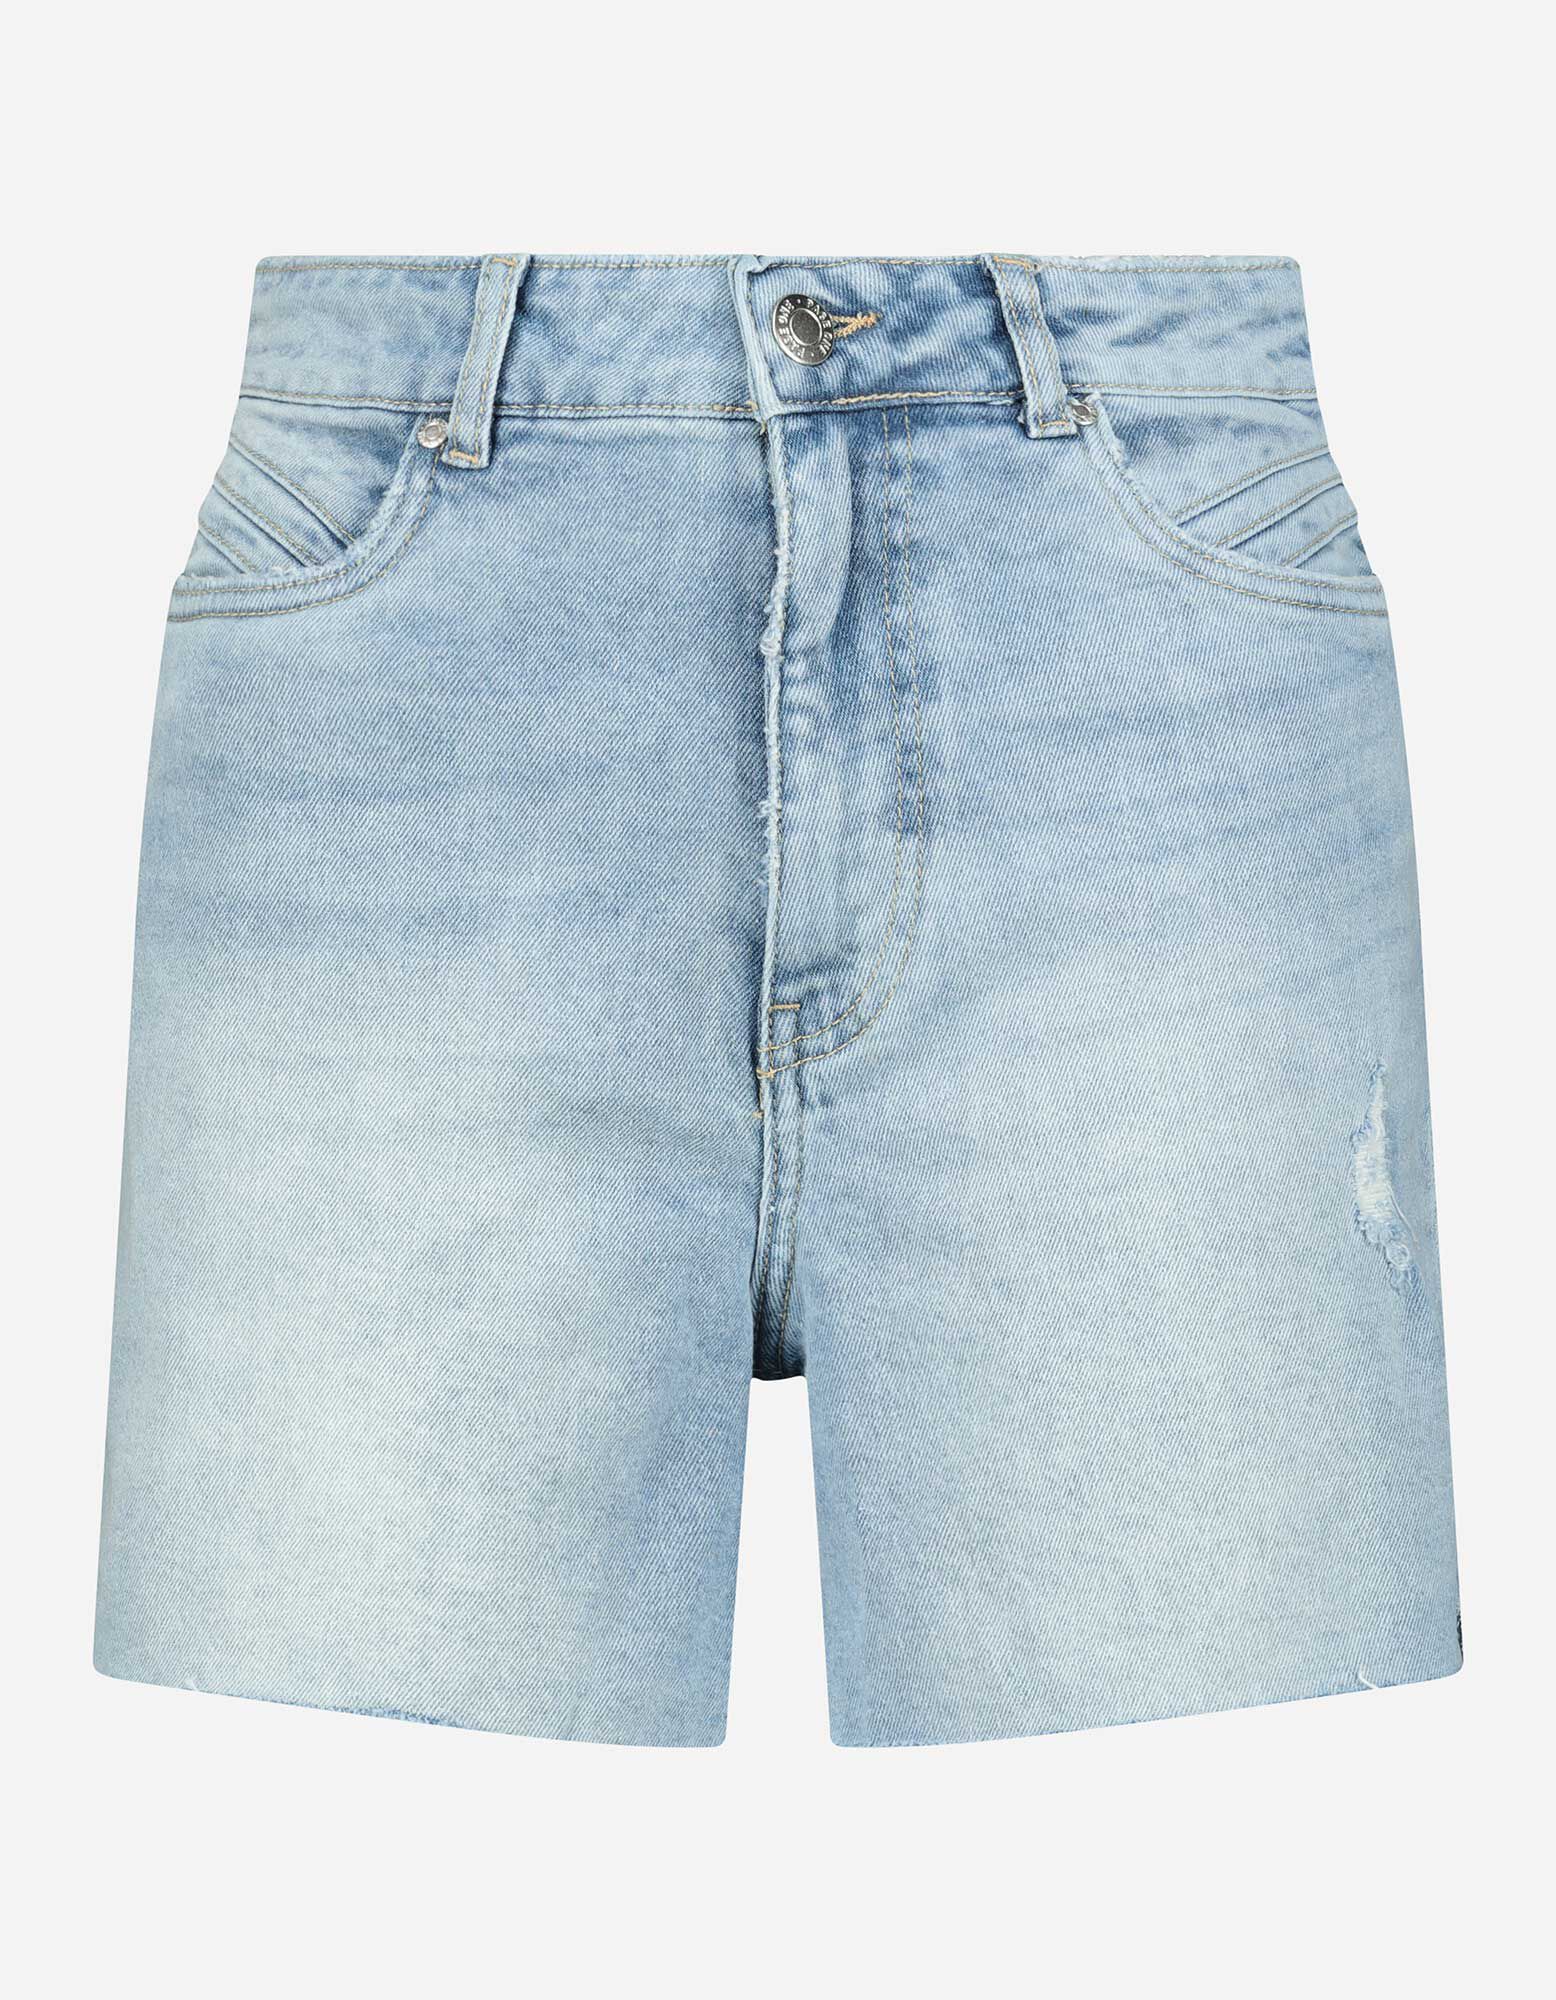 DAMEN Jeans Shorts jeans NO STYLE Clp Shorts jeans Blau 38 Rabatt 50 % 